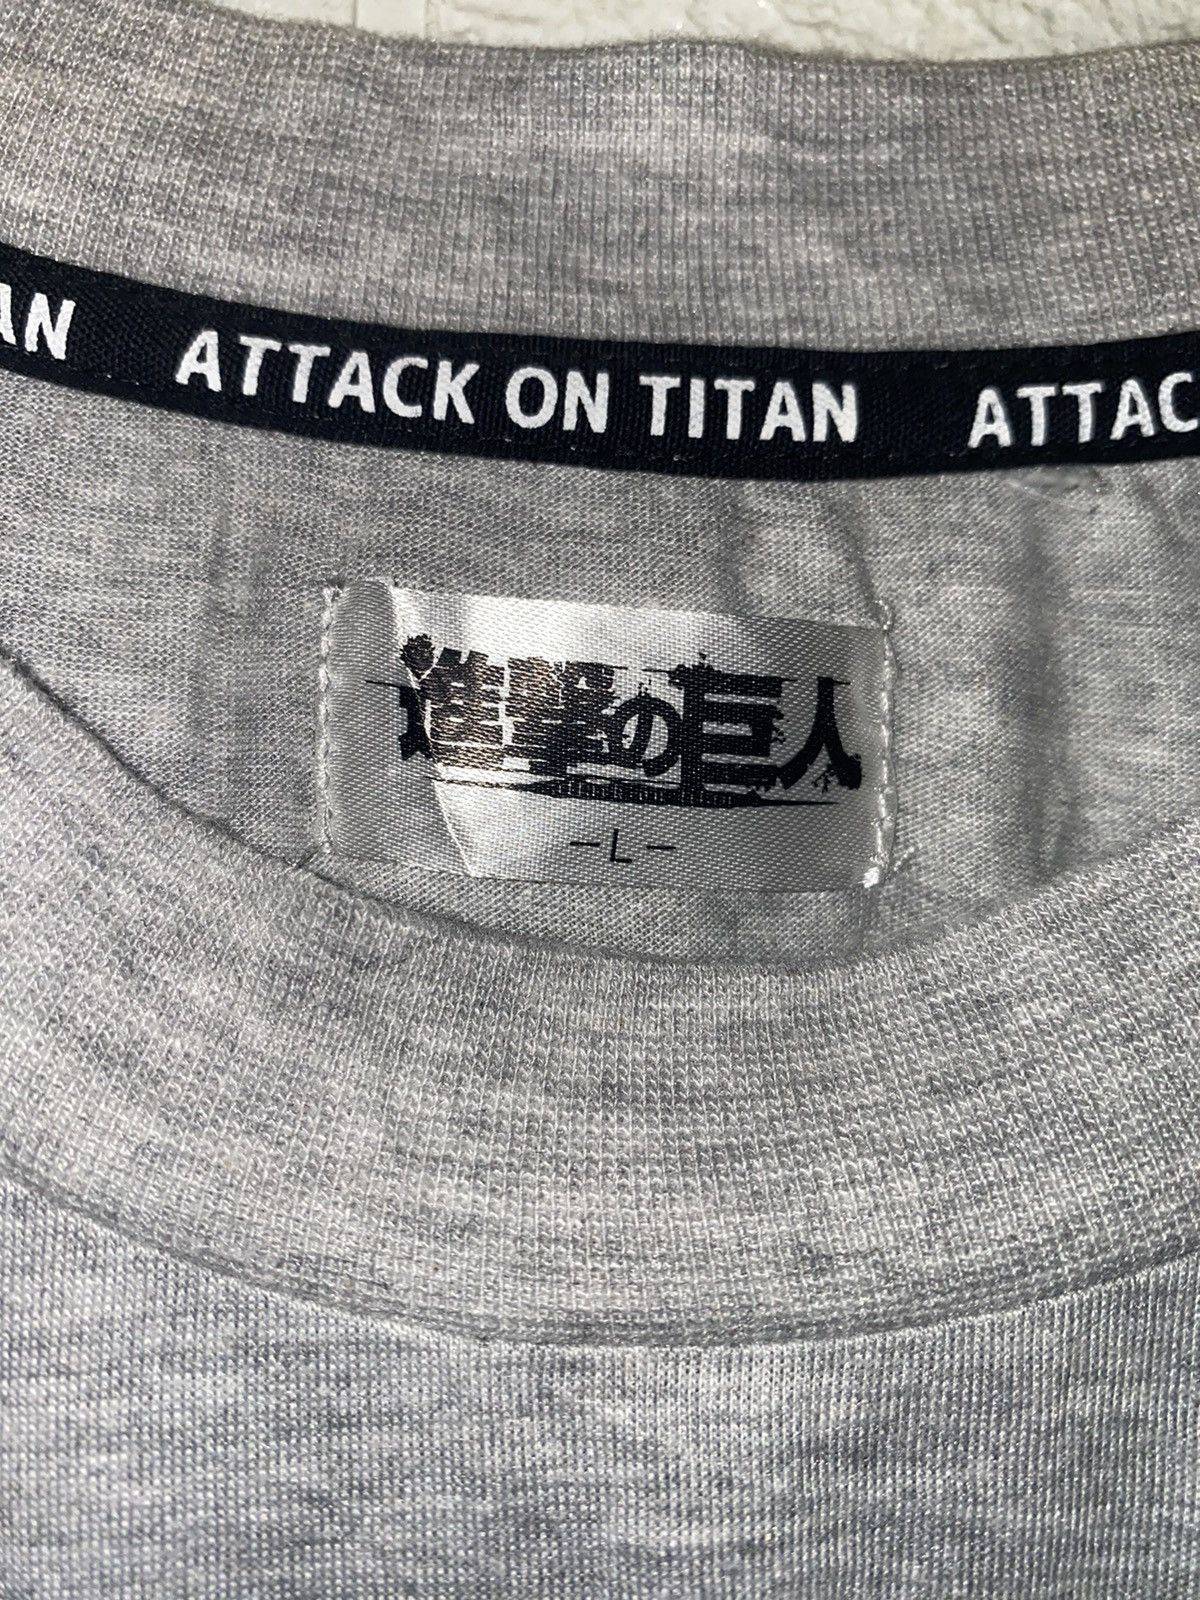 Japanese Brand - Attack on titan tshirt - 2